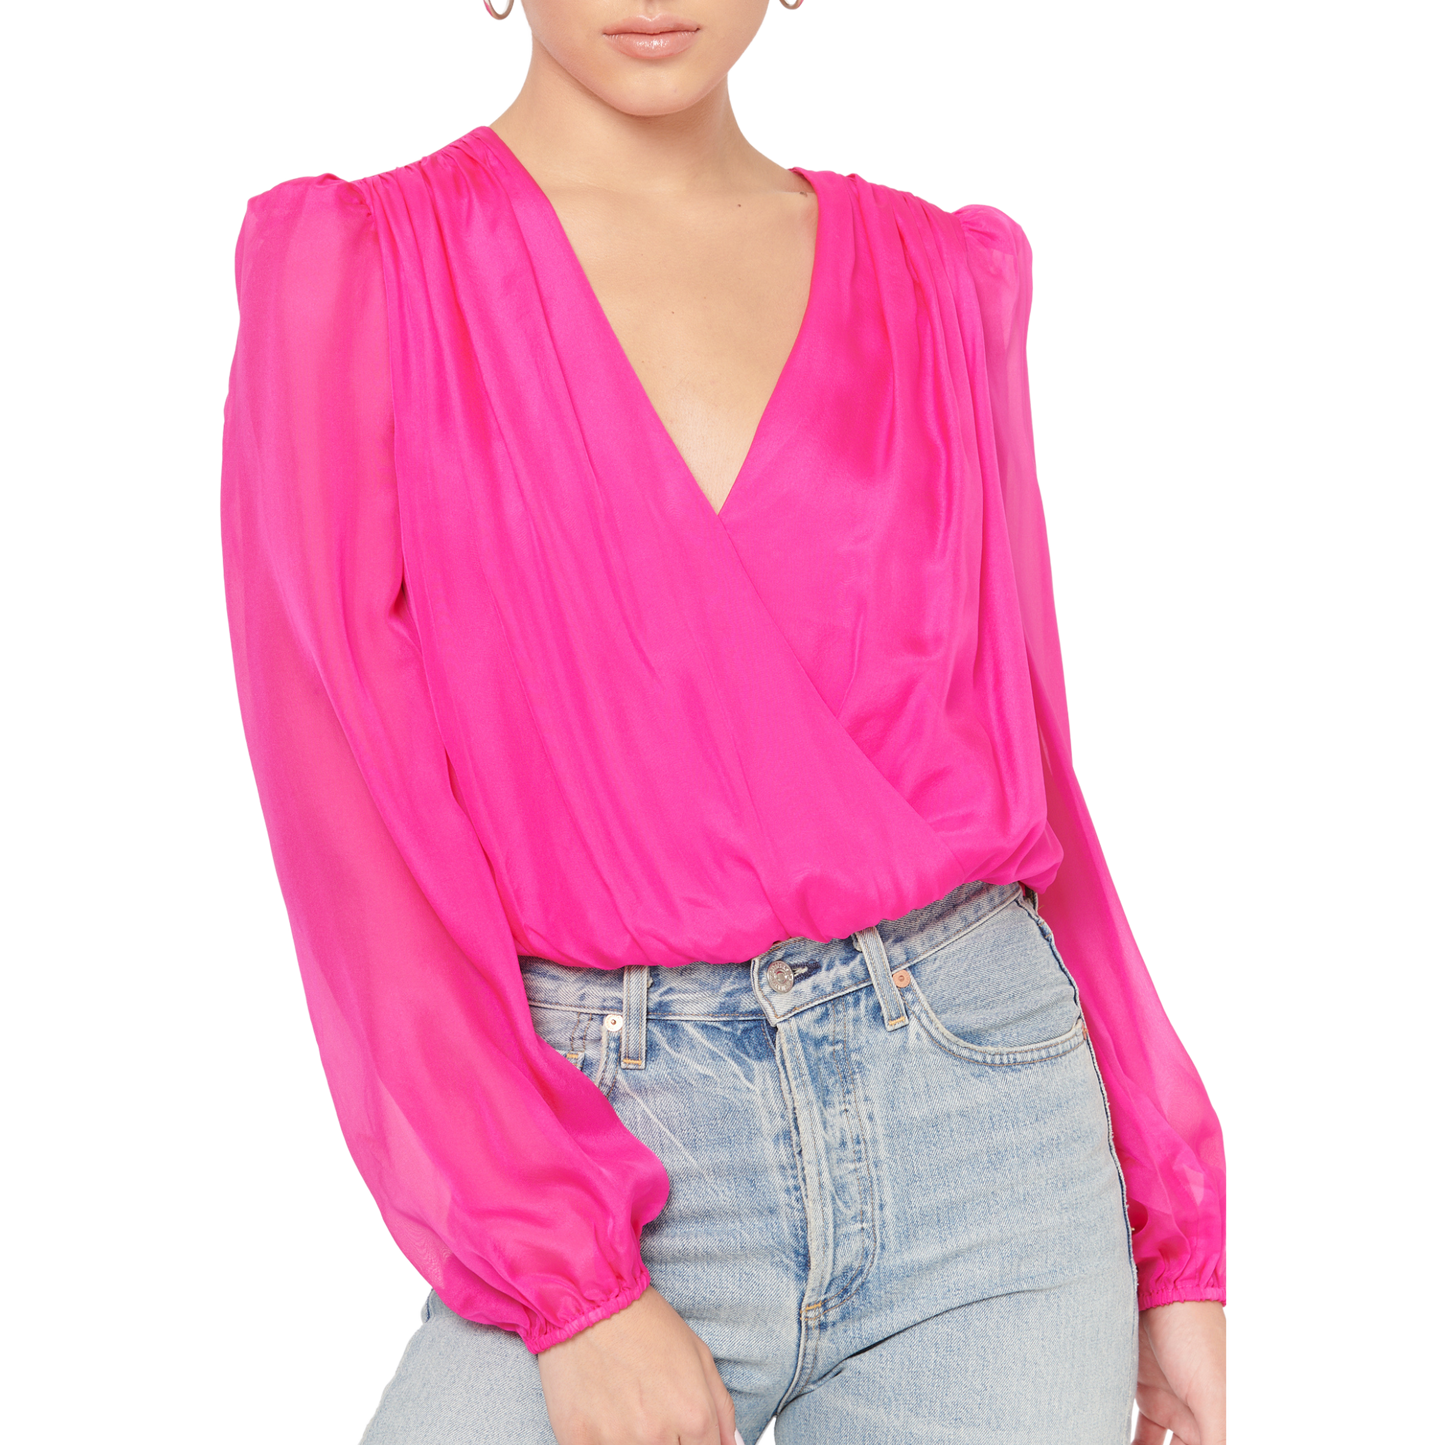 Cami NYC Isa Neon Pink Bodysuit